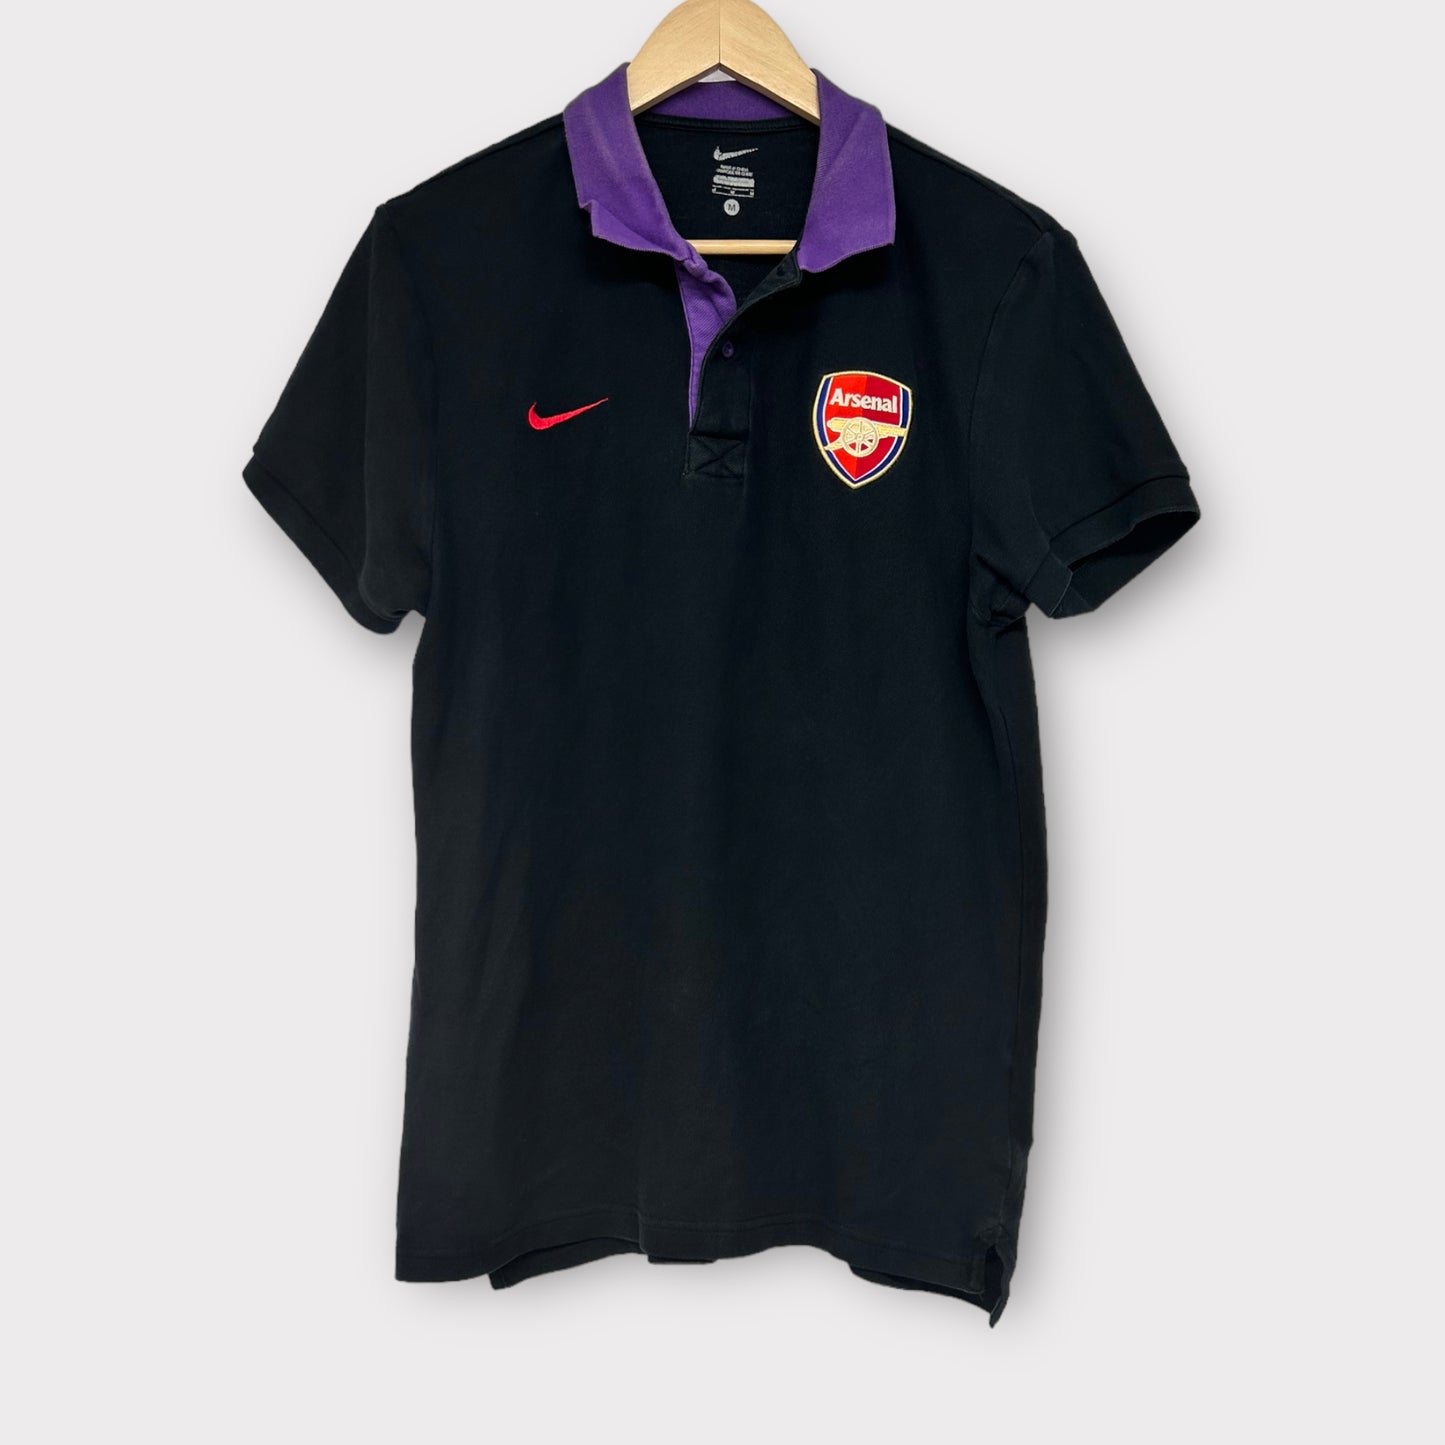 Arsenal FC 2012/13 Nike Polo Shirt (Medium)